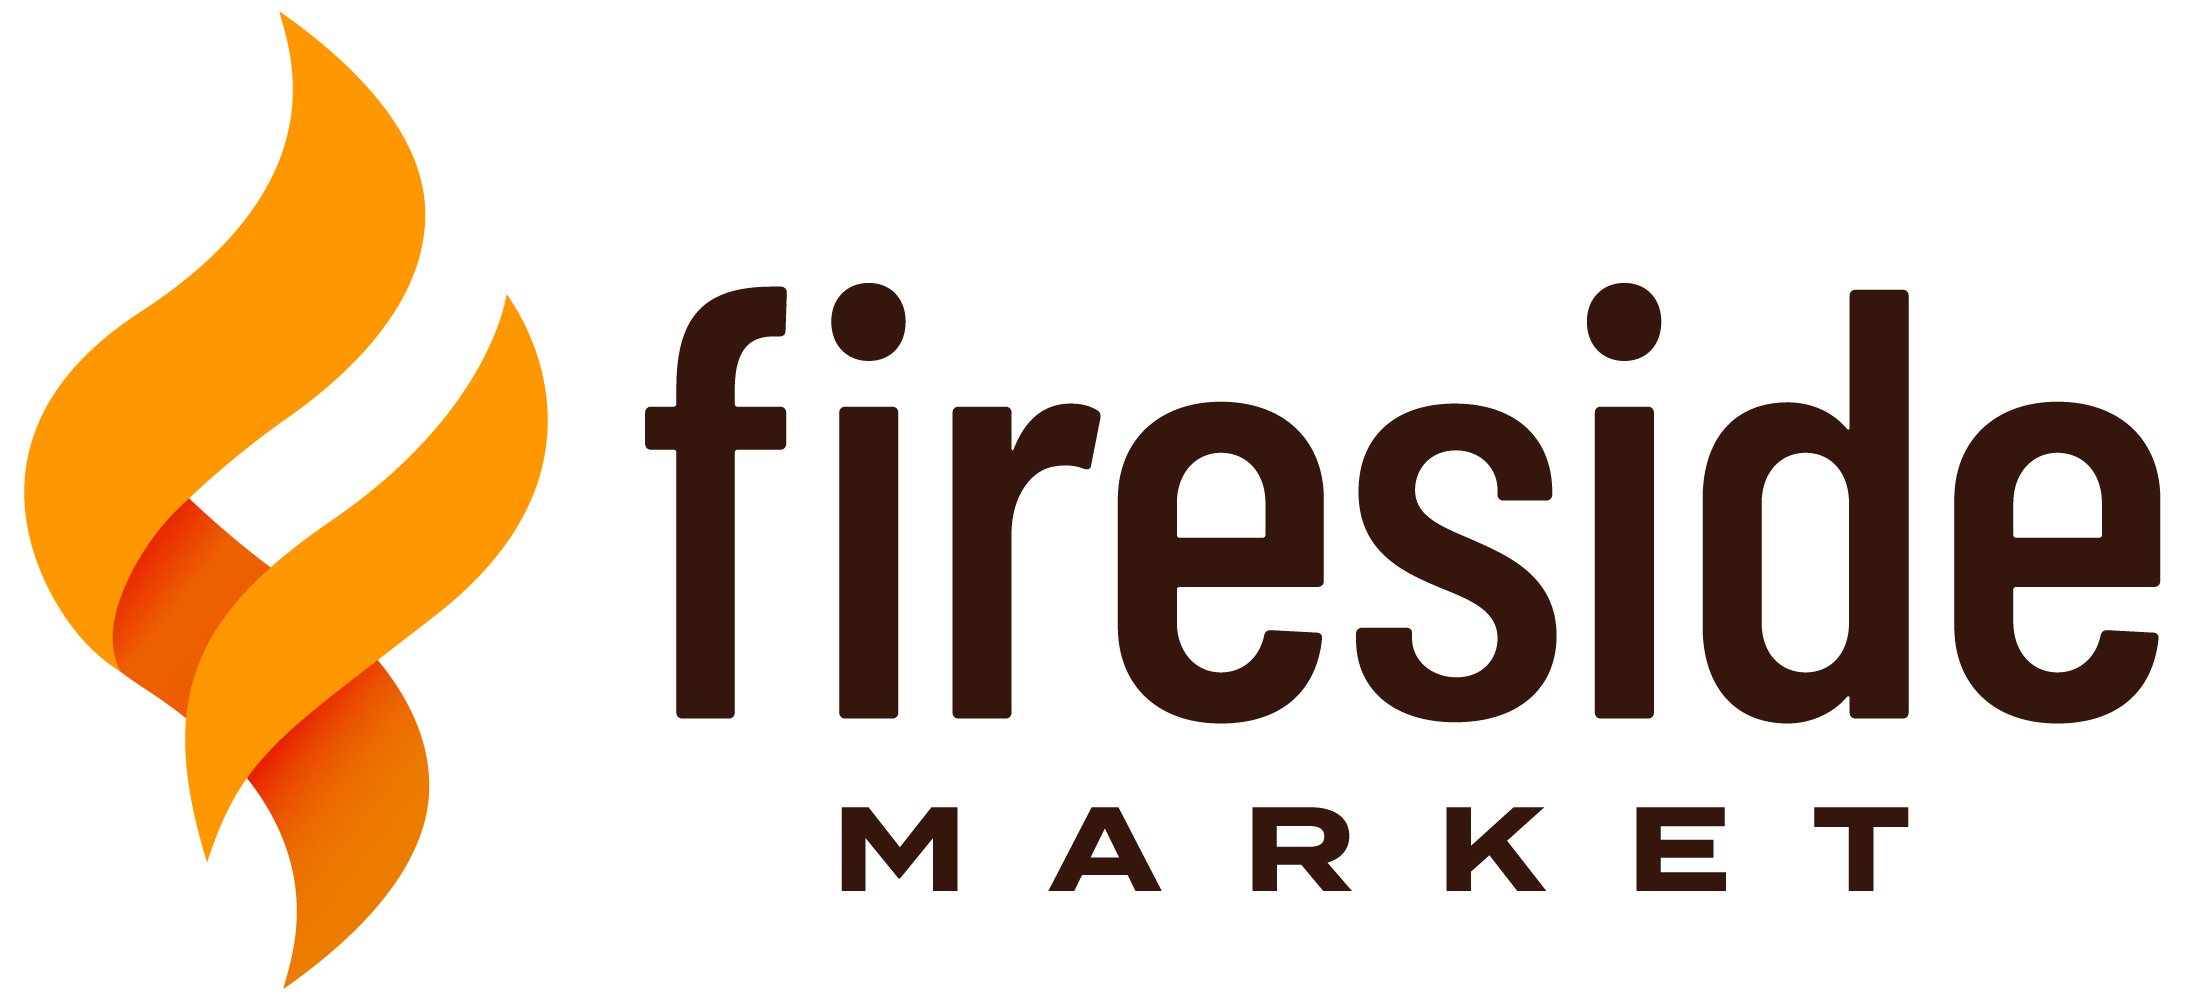 Potawatomi - Fireside Market - High Res Color Logo - Horizontal.jpg